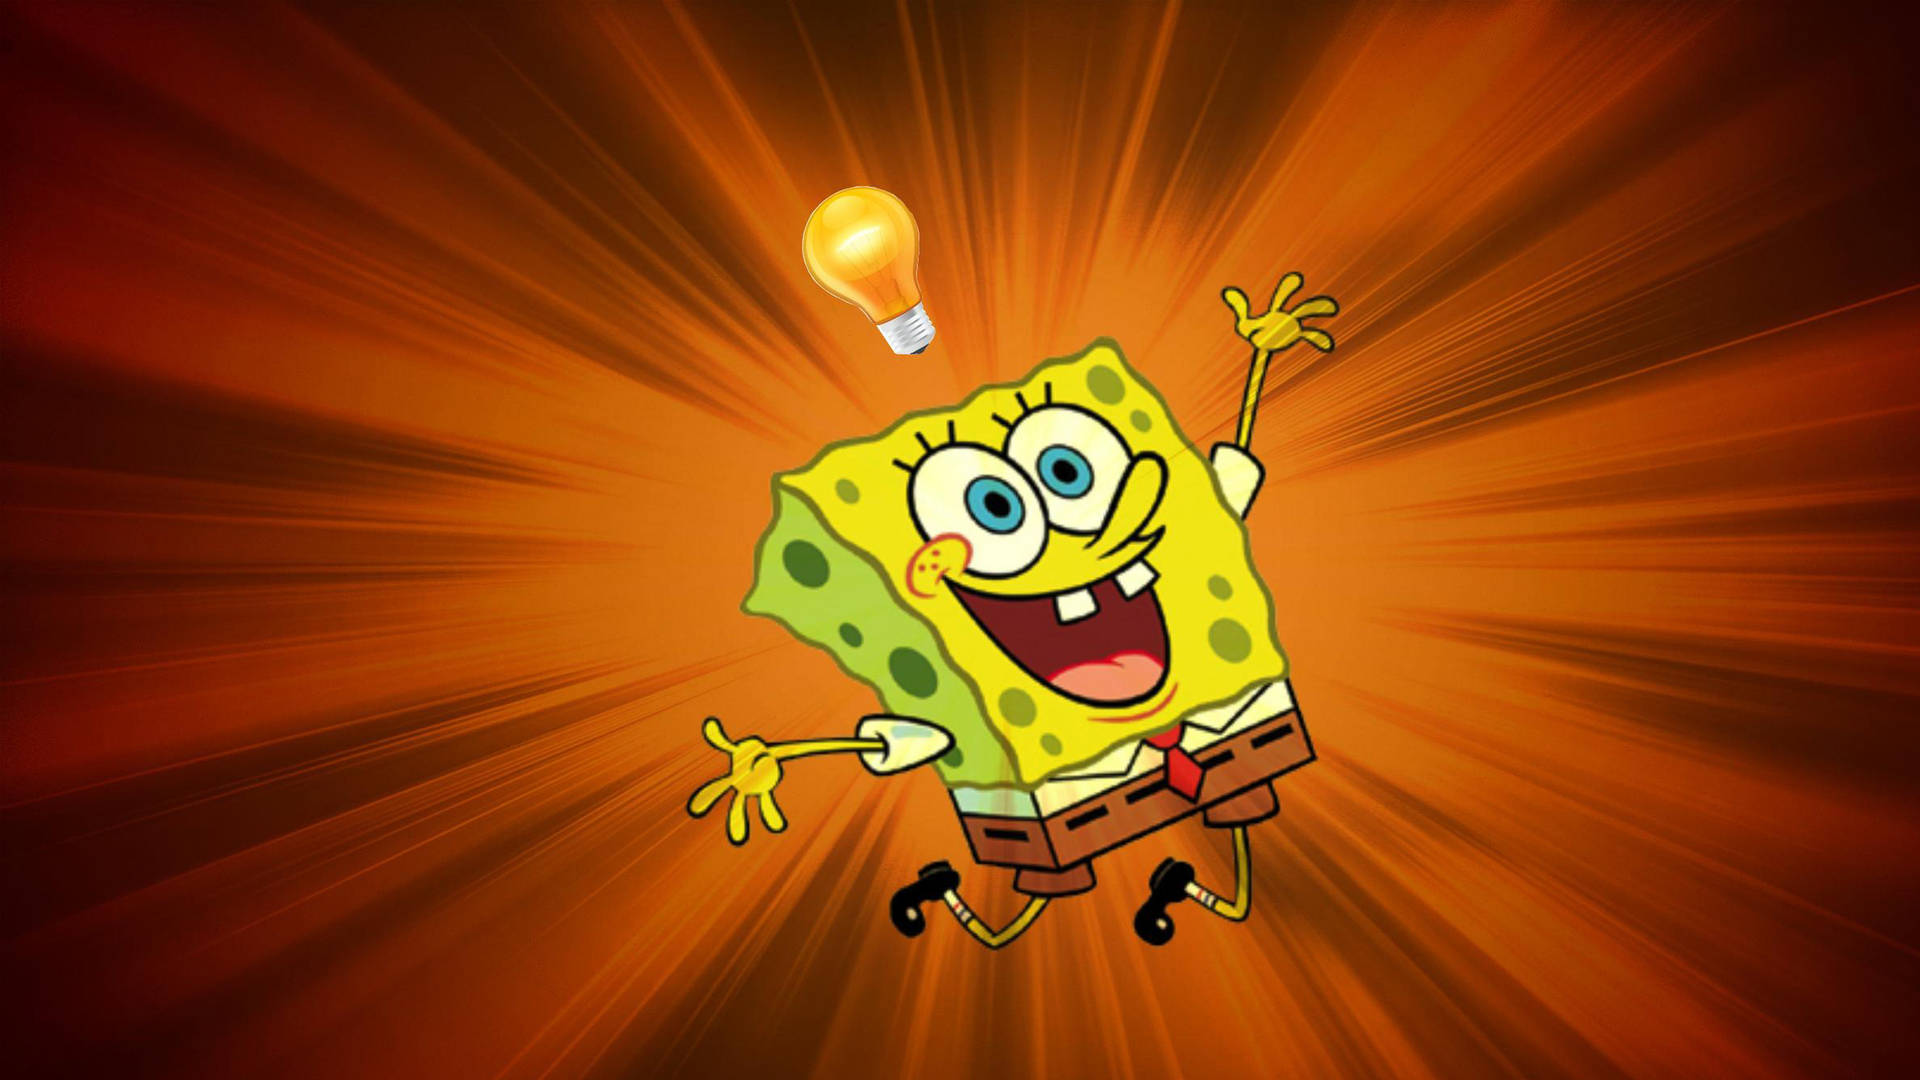 Feel The Cool Vibes With Spongebob Squarepants!